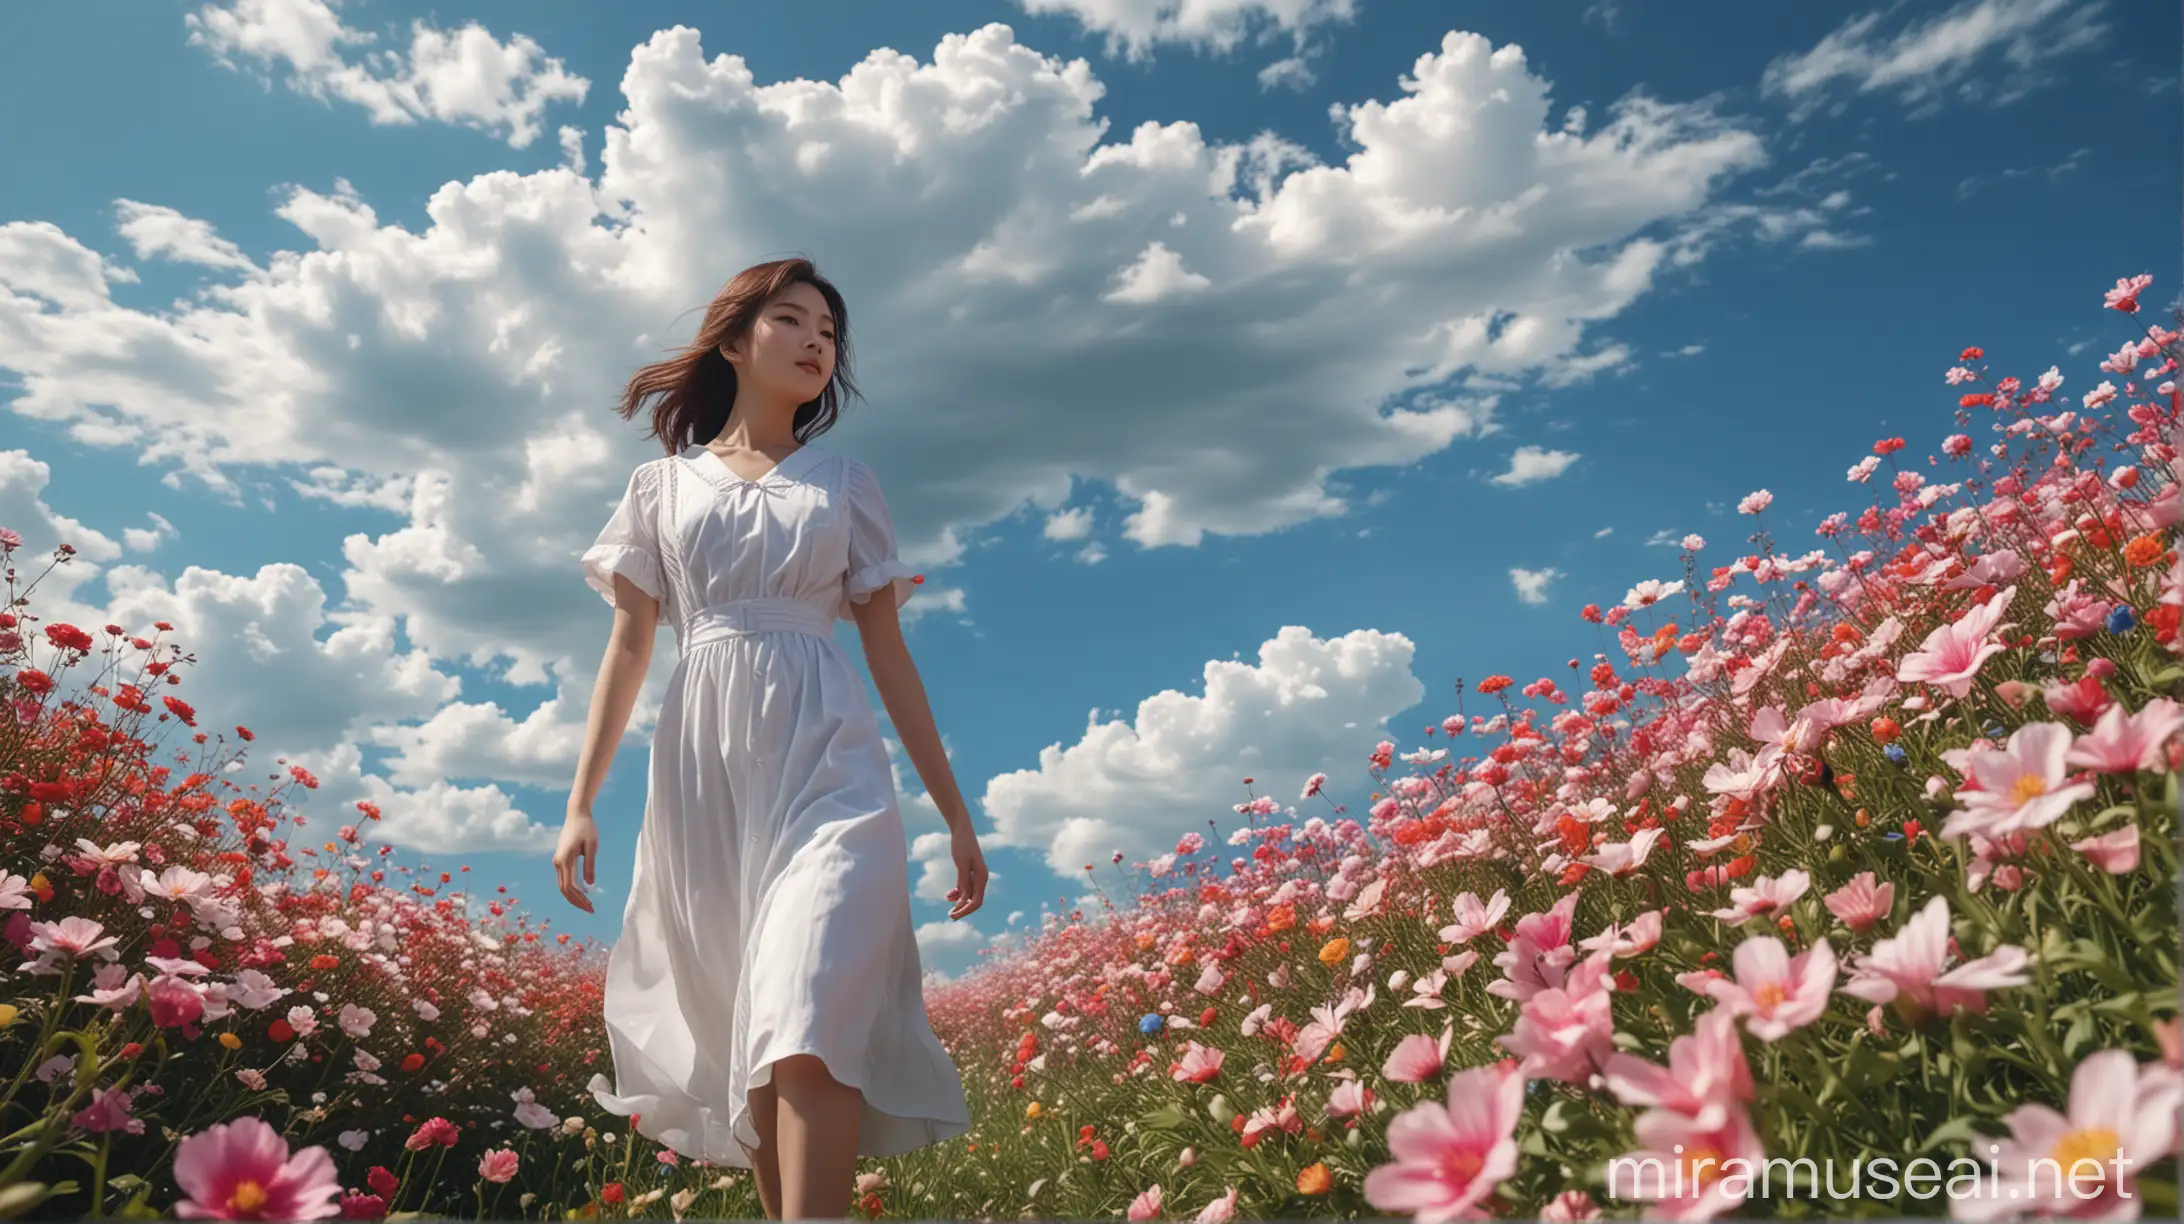 Stunning Japanese Girl amidst Vibrant Flower Field and Blue Sky